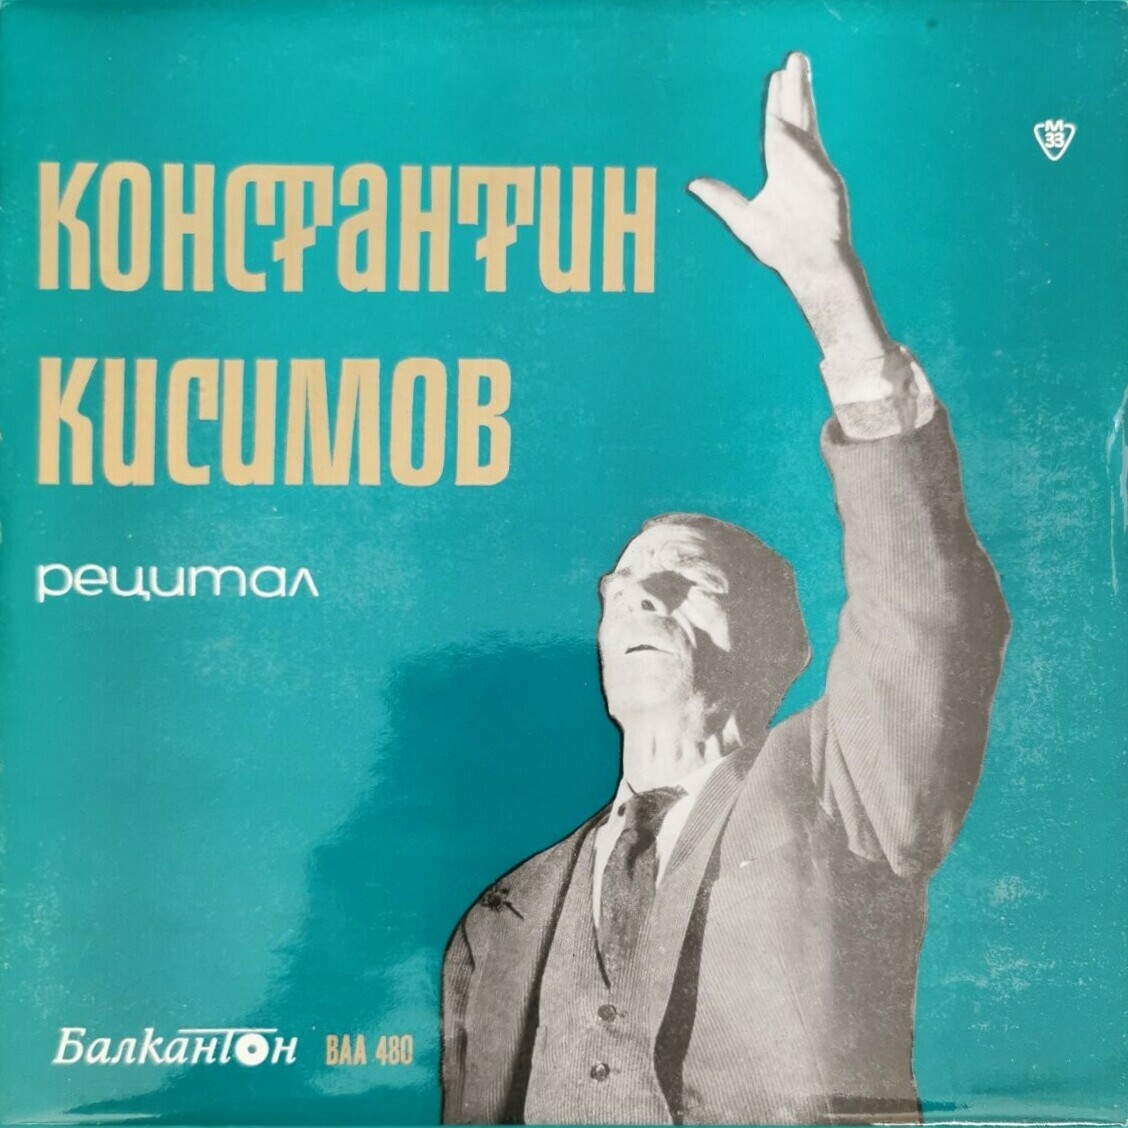 Константин КИСИМОВ - рецитал